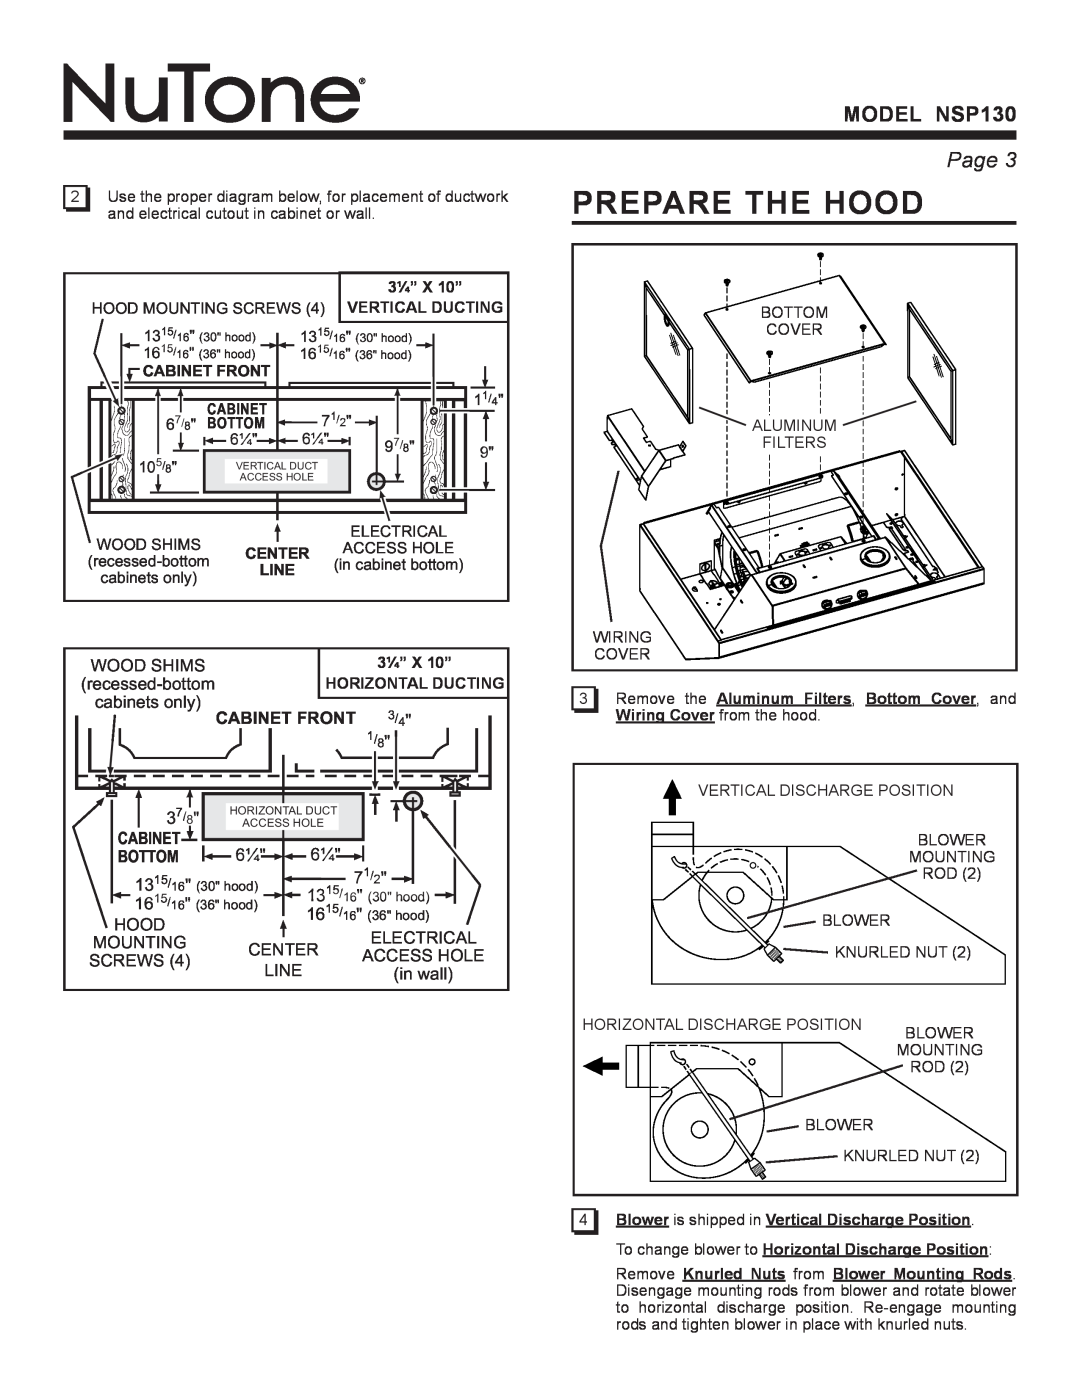 NuTone NSP130 warranty Prepare The Hood, CABINET FRONT 3/4, Cabinet, Bottom, model nsp130, Page  